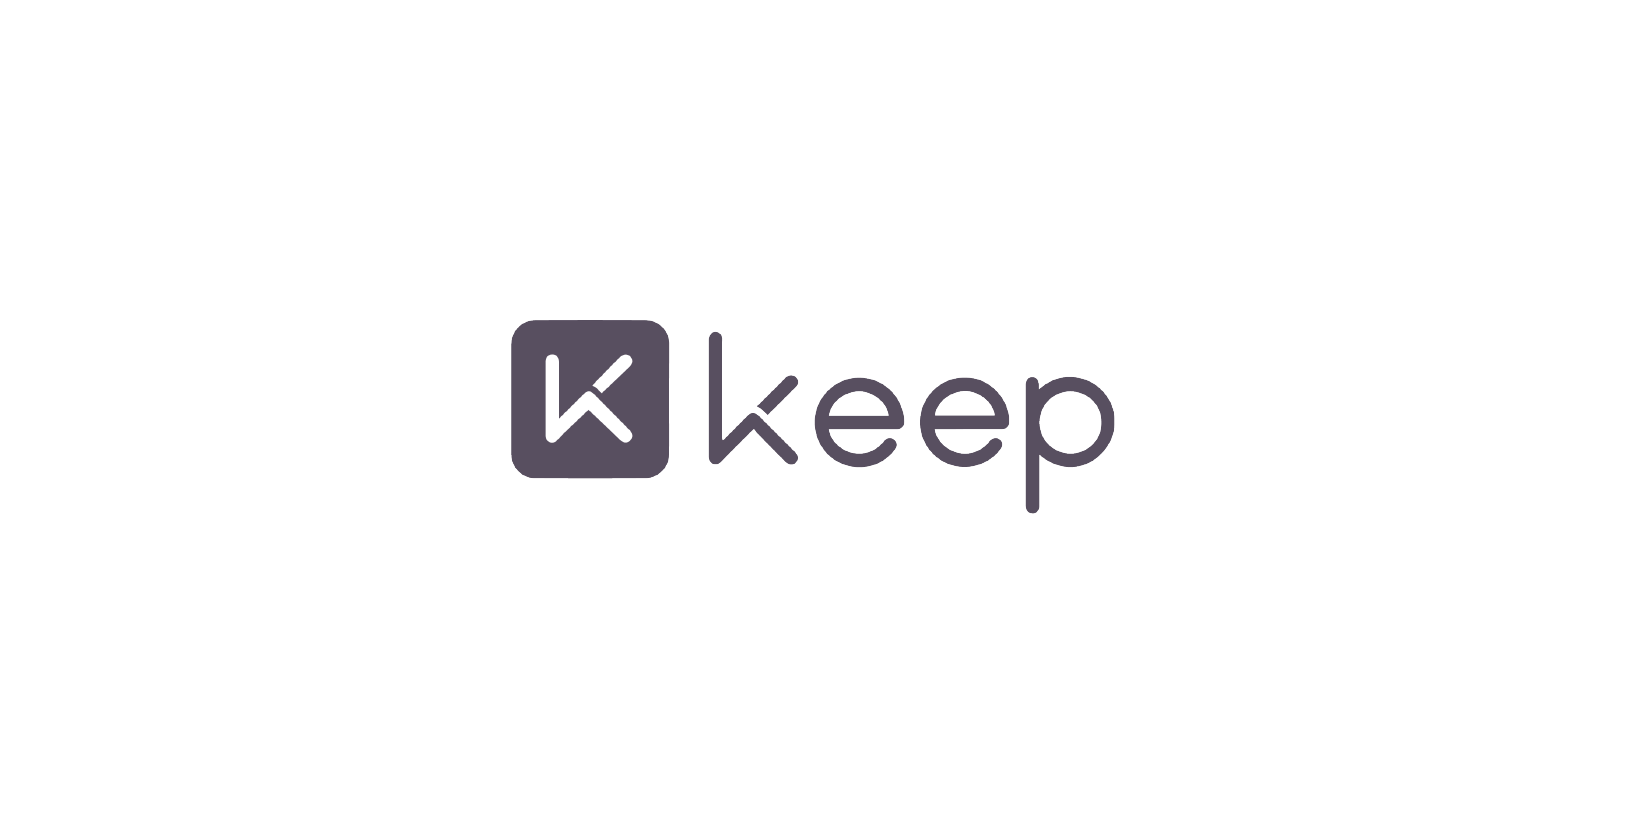 Vision Fund investment portfolio company Keep's logo